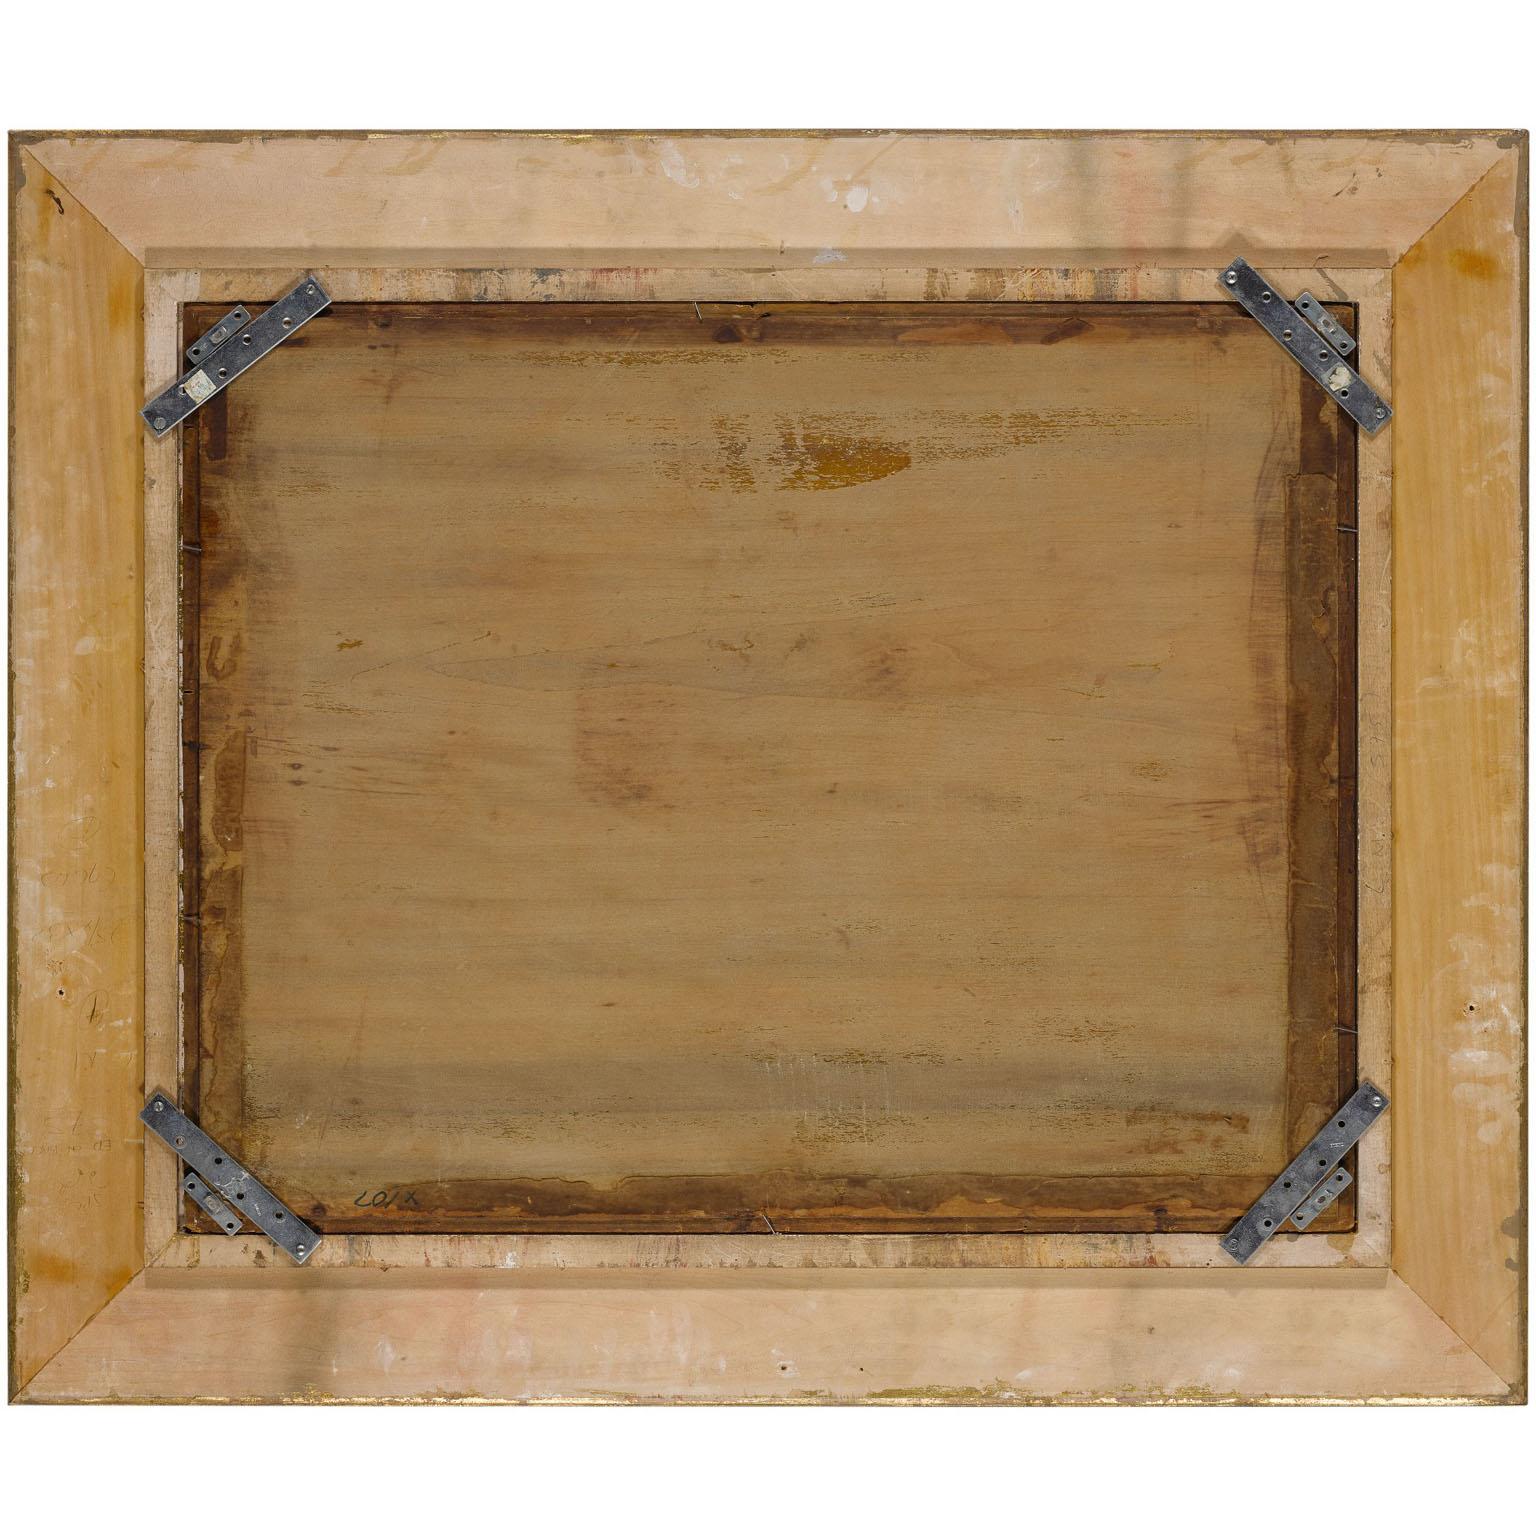 Wood Eduardo León Garrido (Spanish, 1856-1949) Oil on Panel 